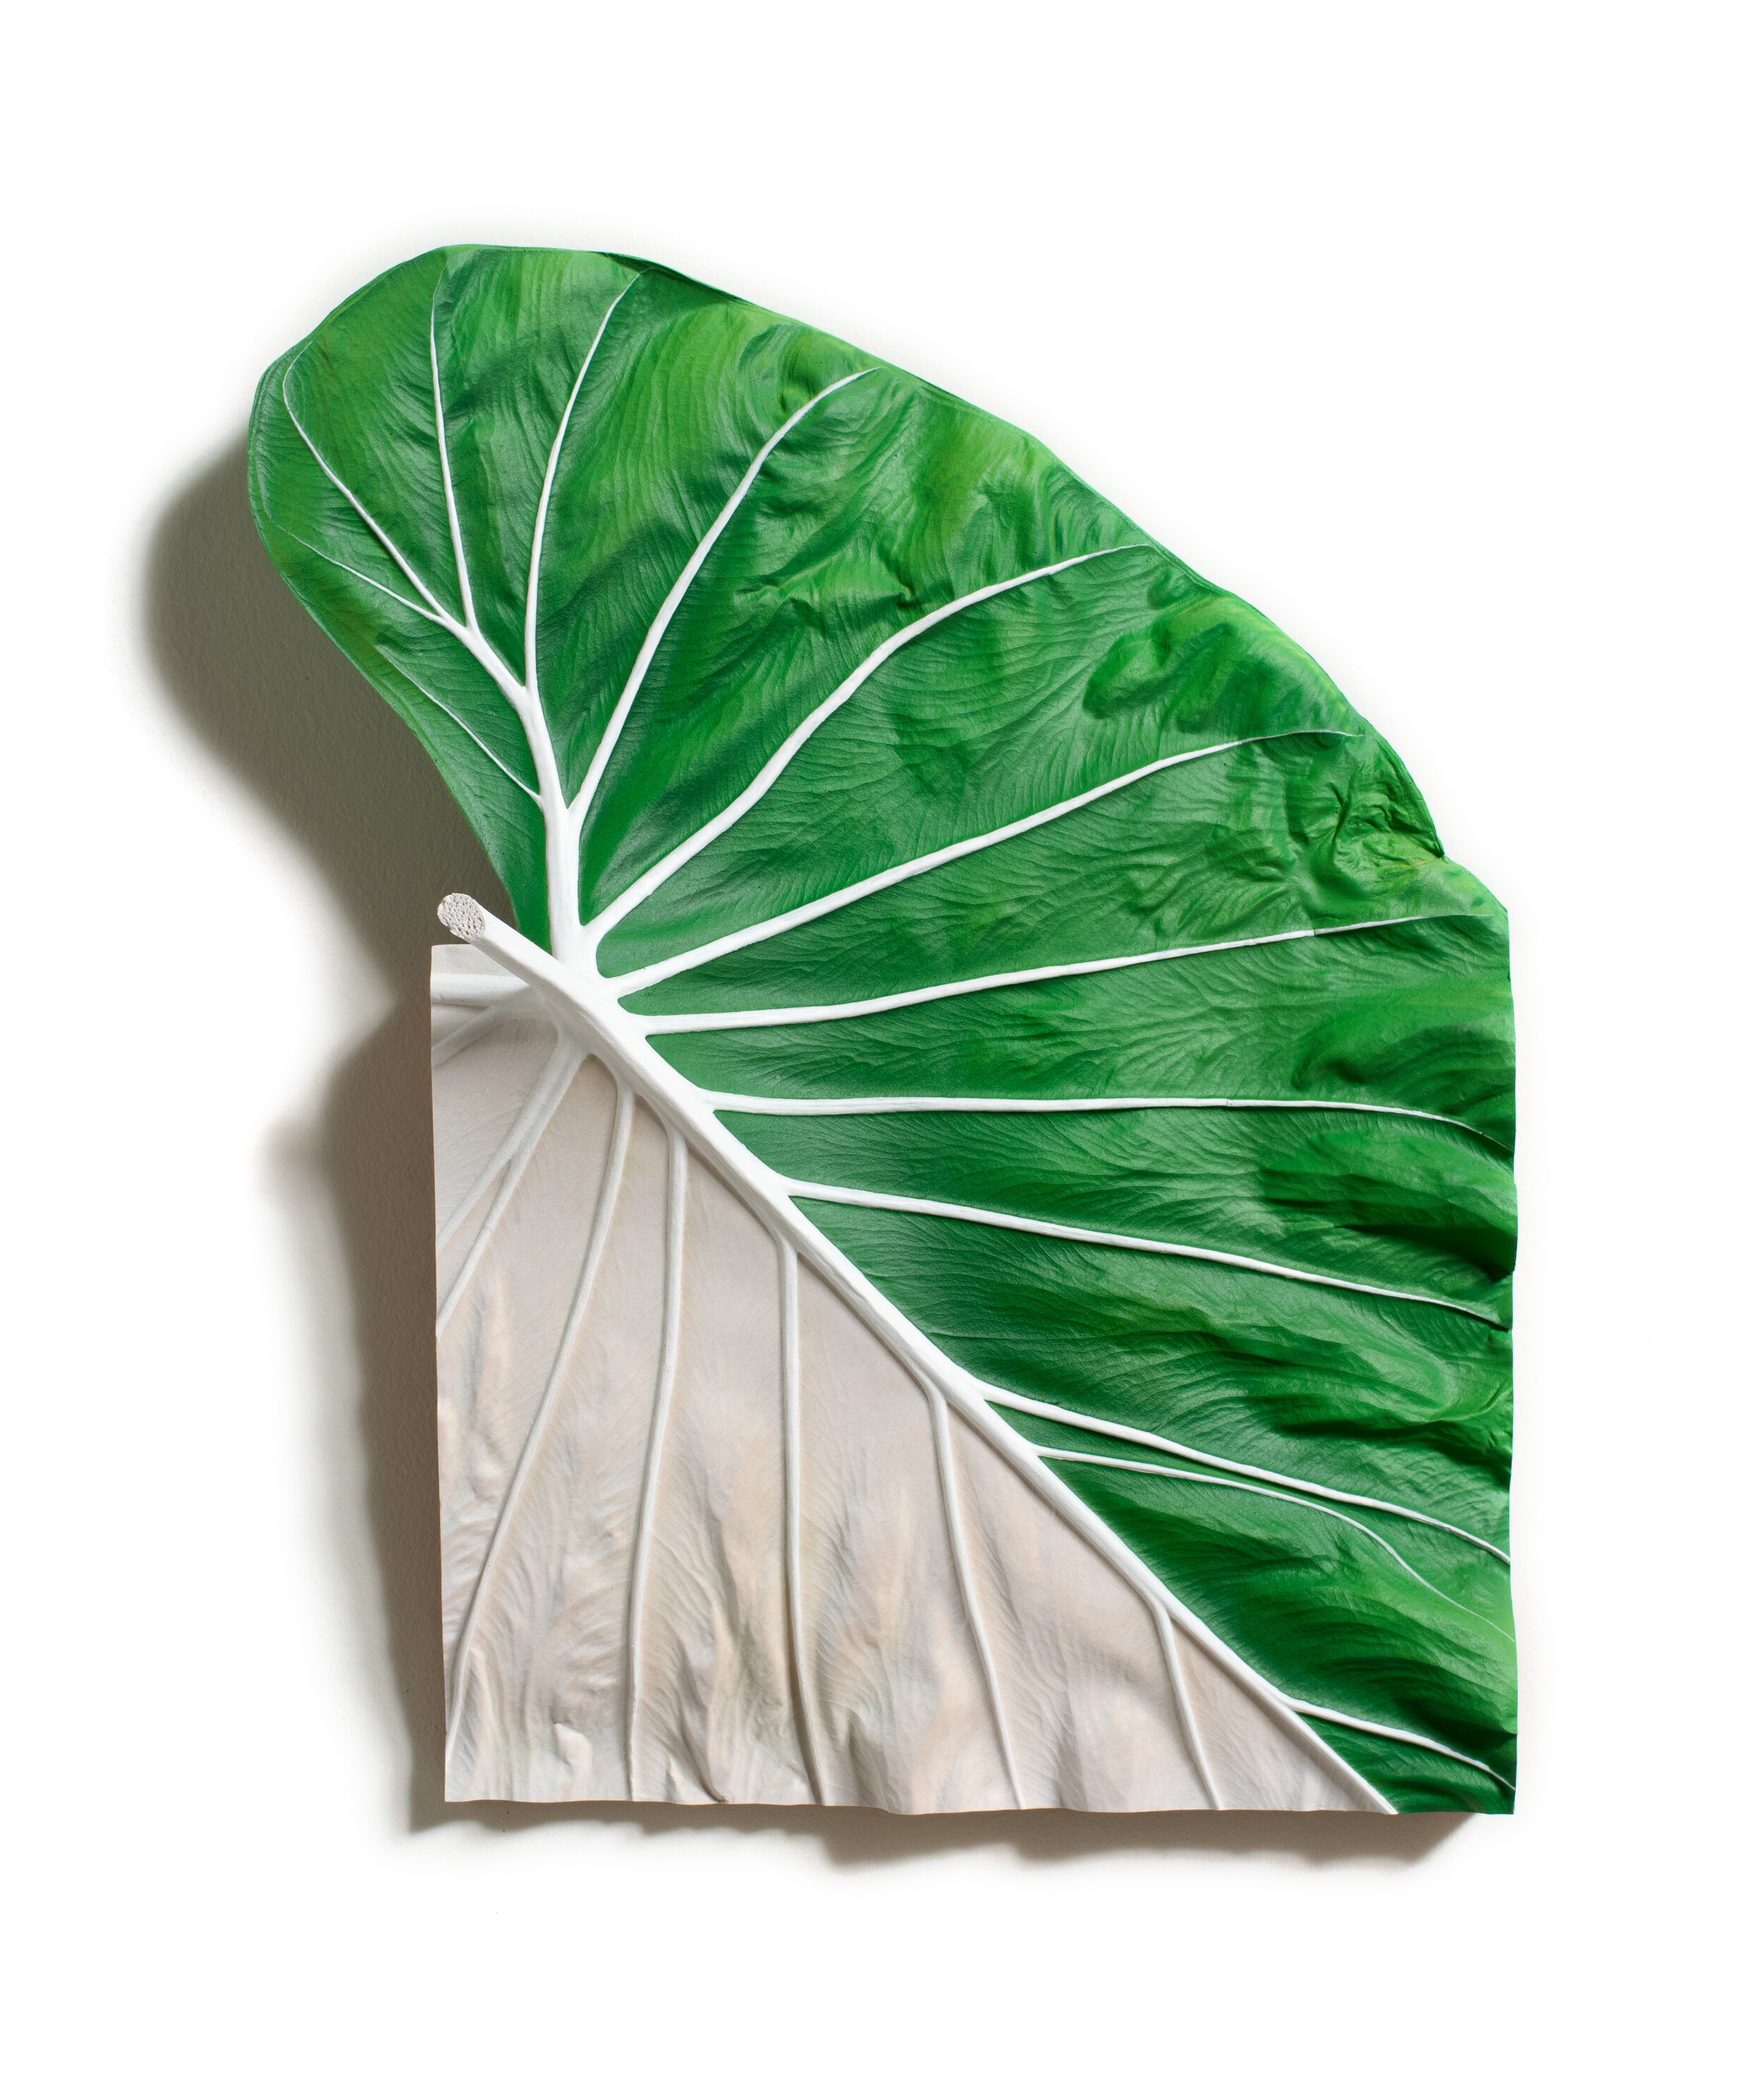   Leaflet (Anthurium) , 2021&nbsp; Acrylic, aquaresin, and wood&nbsp; 17 1/2 x 14 x 4 1/2 inches&nbsp; 